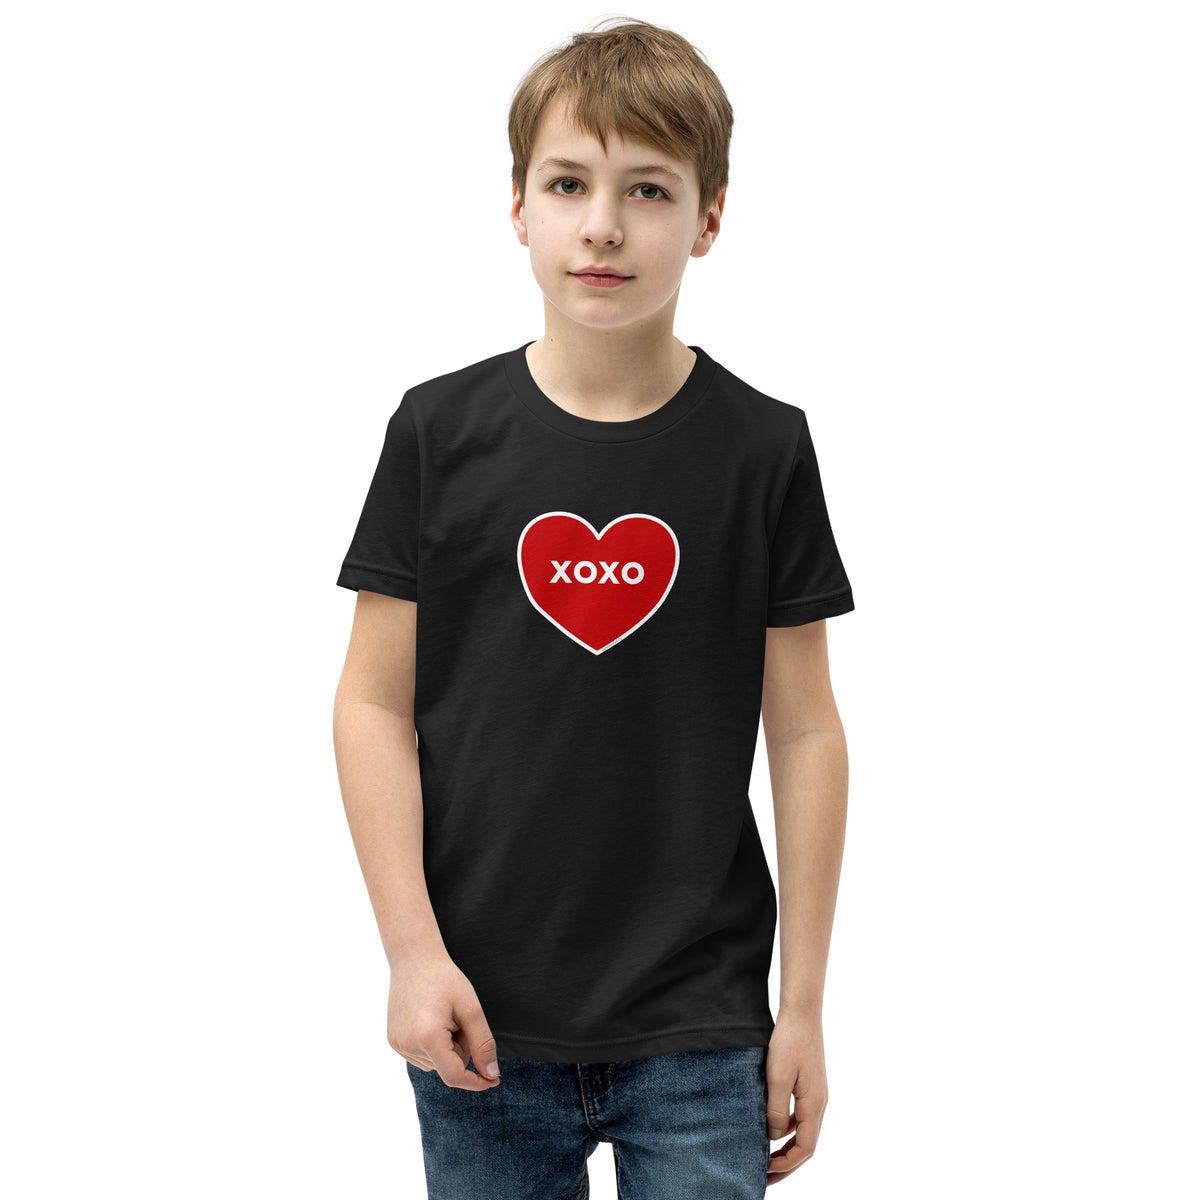 Hugs and Kisses XOXO Heart Kids Valentine’s Day T-Shirt